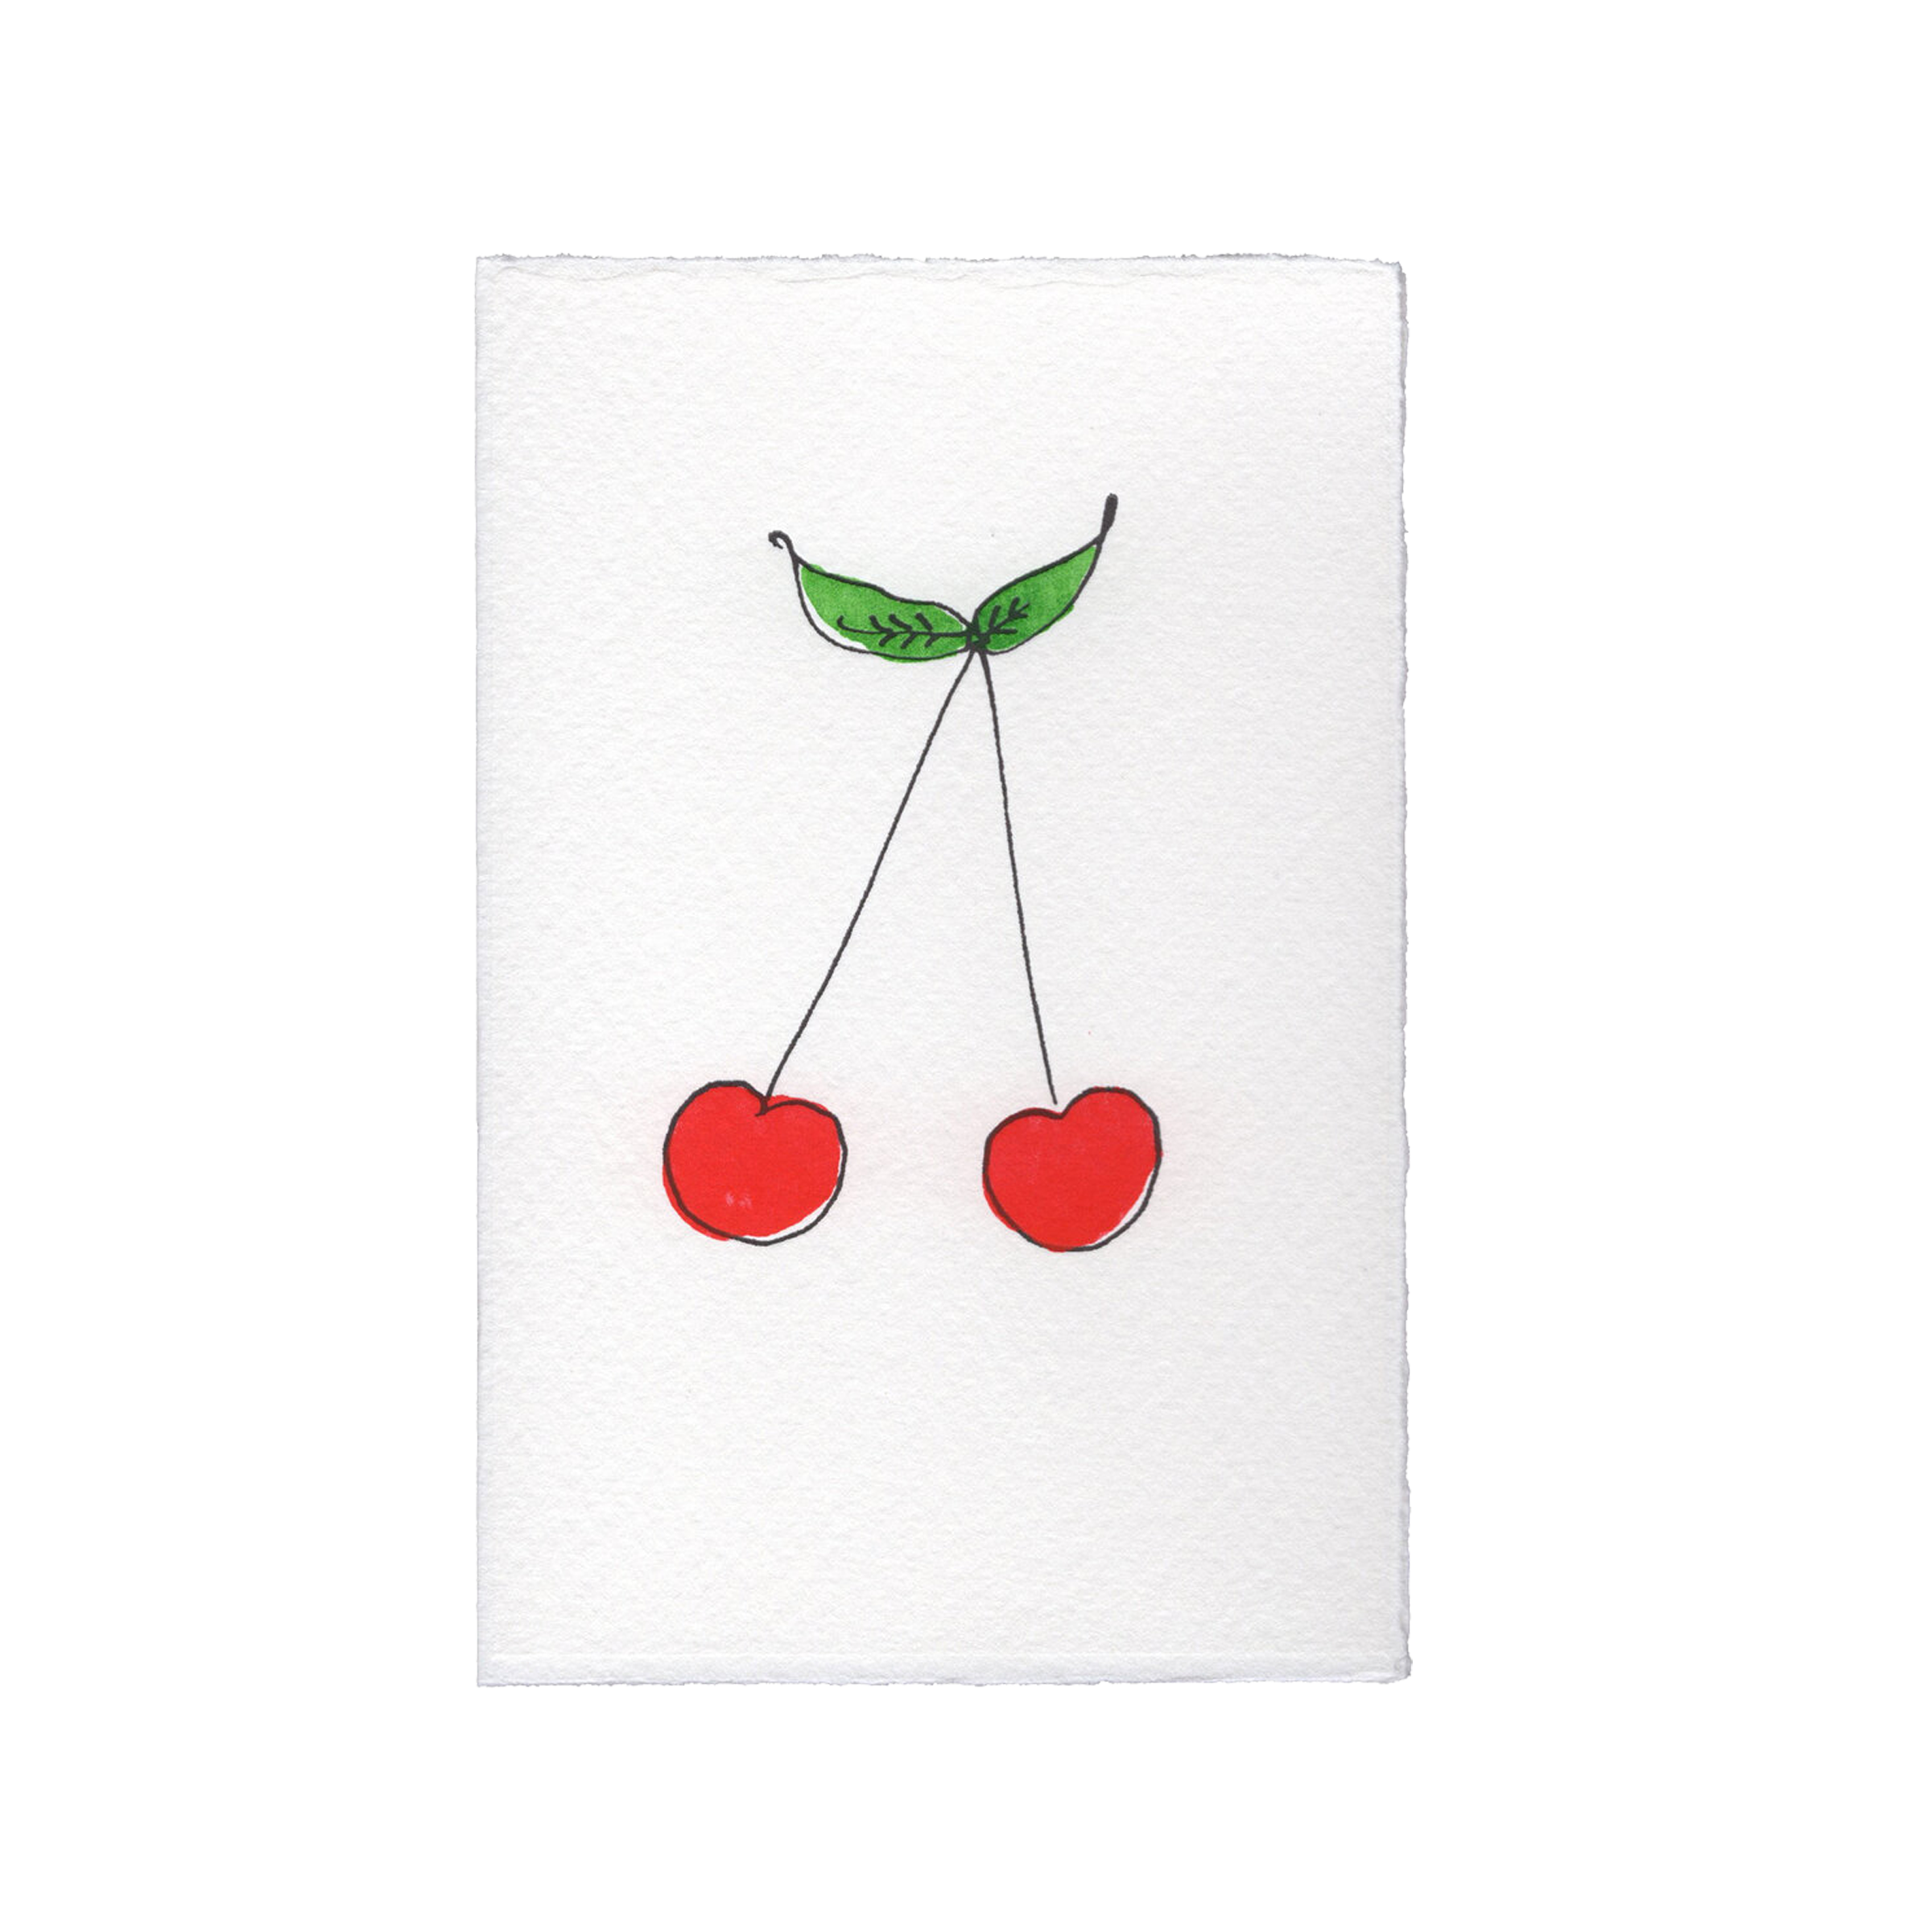 Cherries Notecard